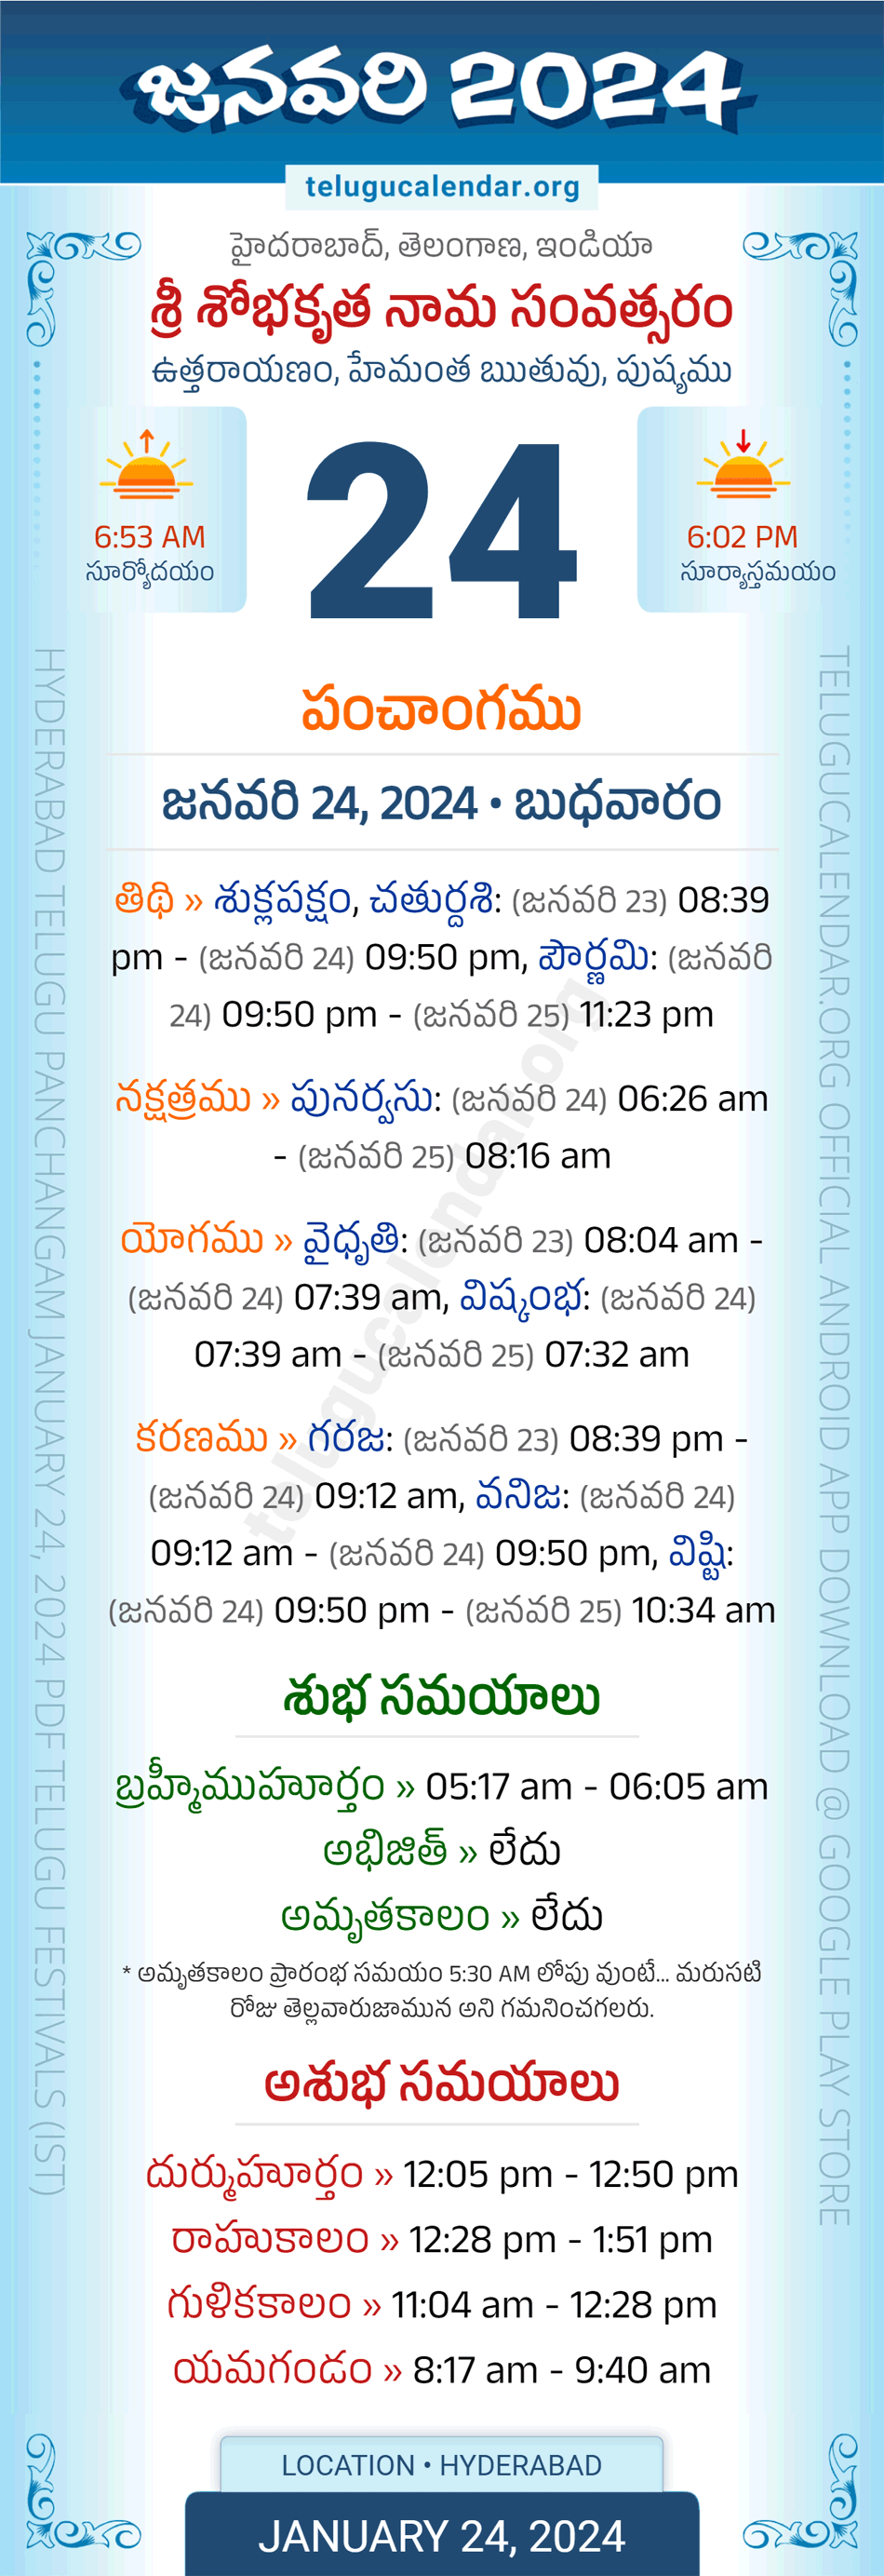 Telugu 2024 Calendar Usa 2024 Holiday Calendar